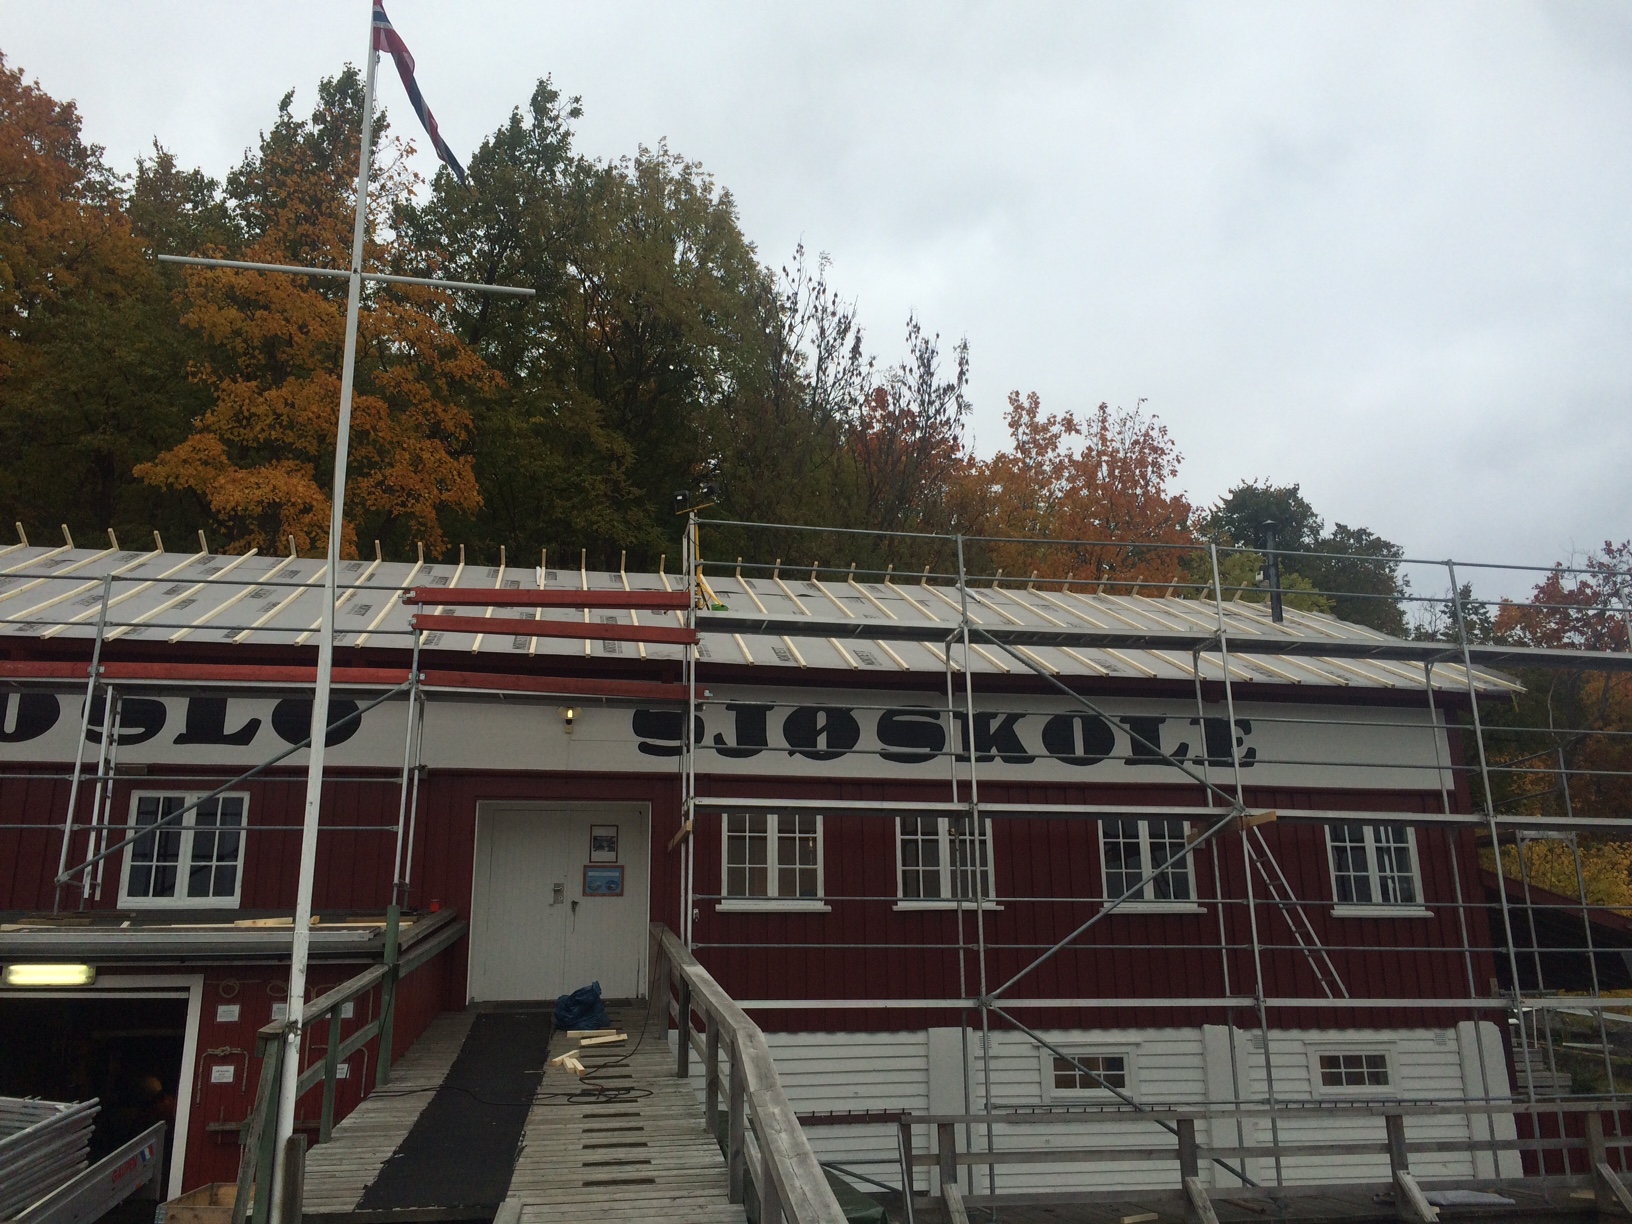 Oslo Sjøskole